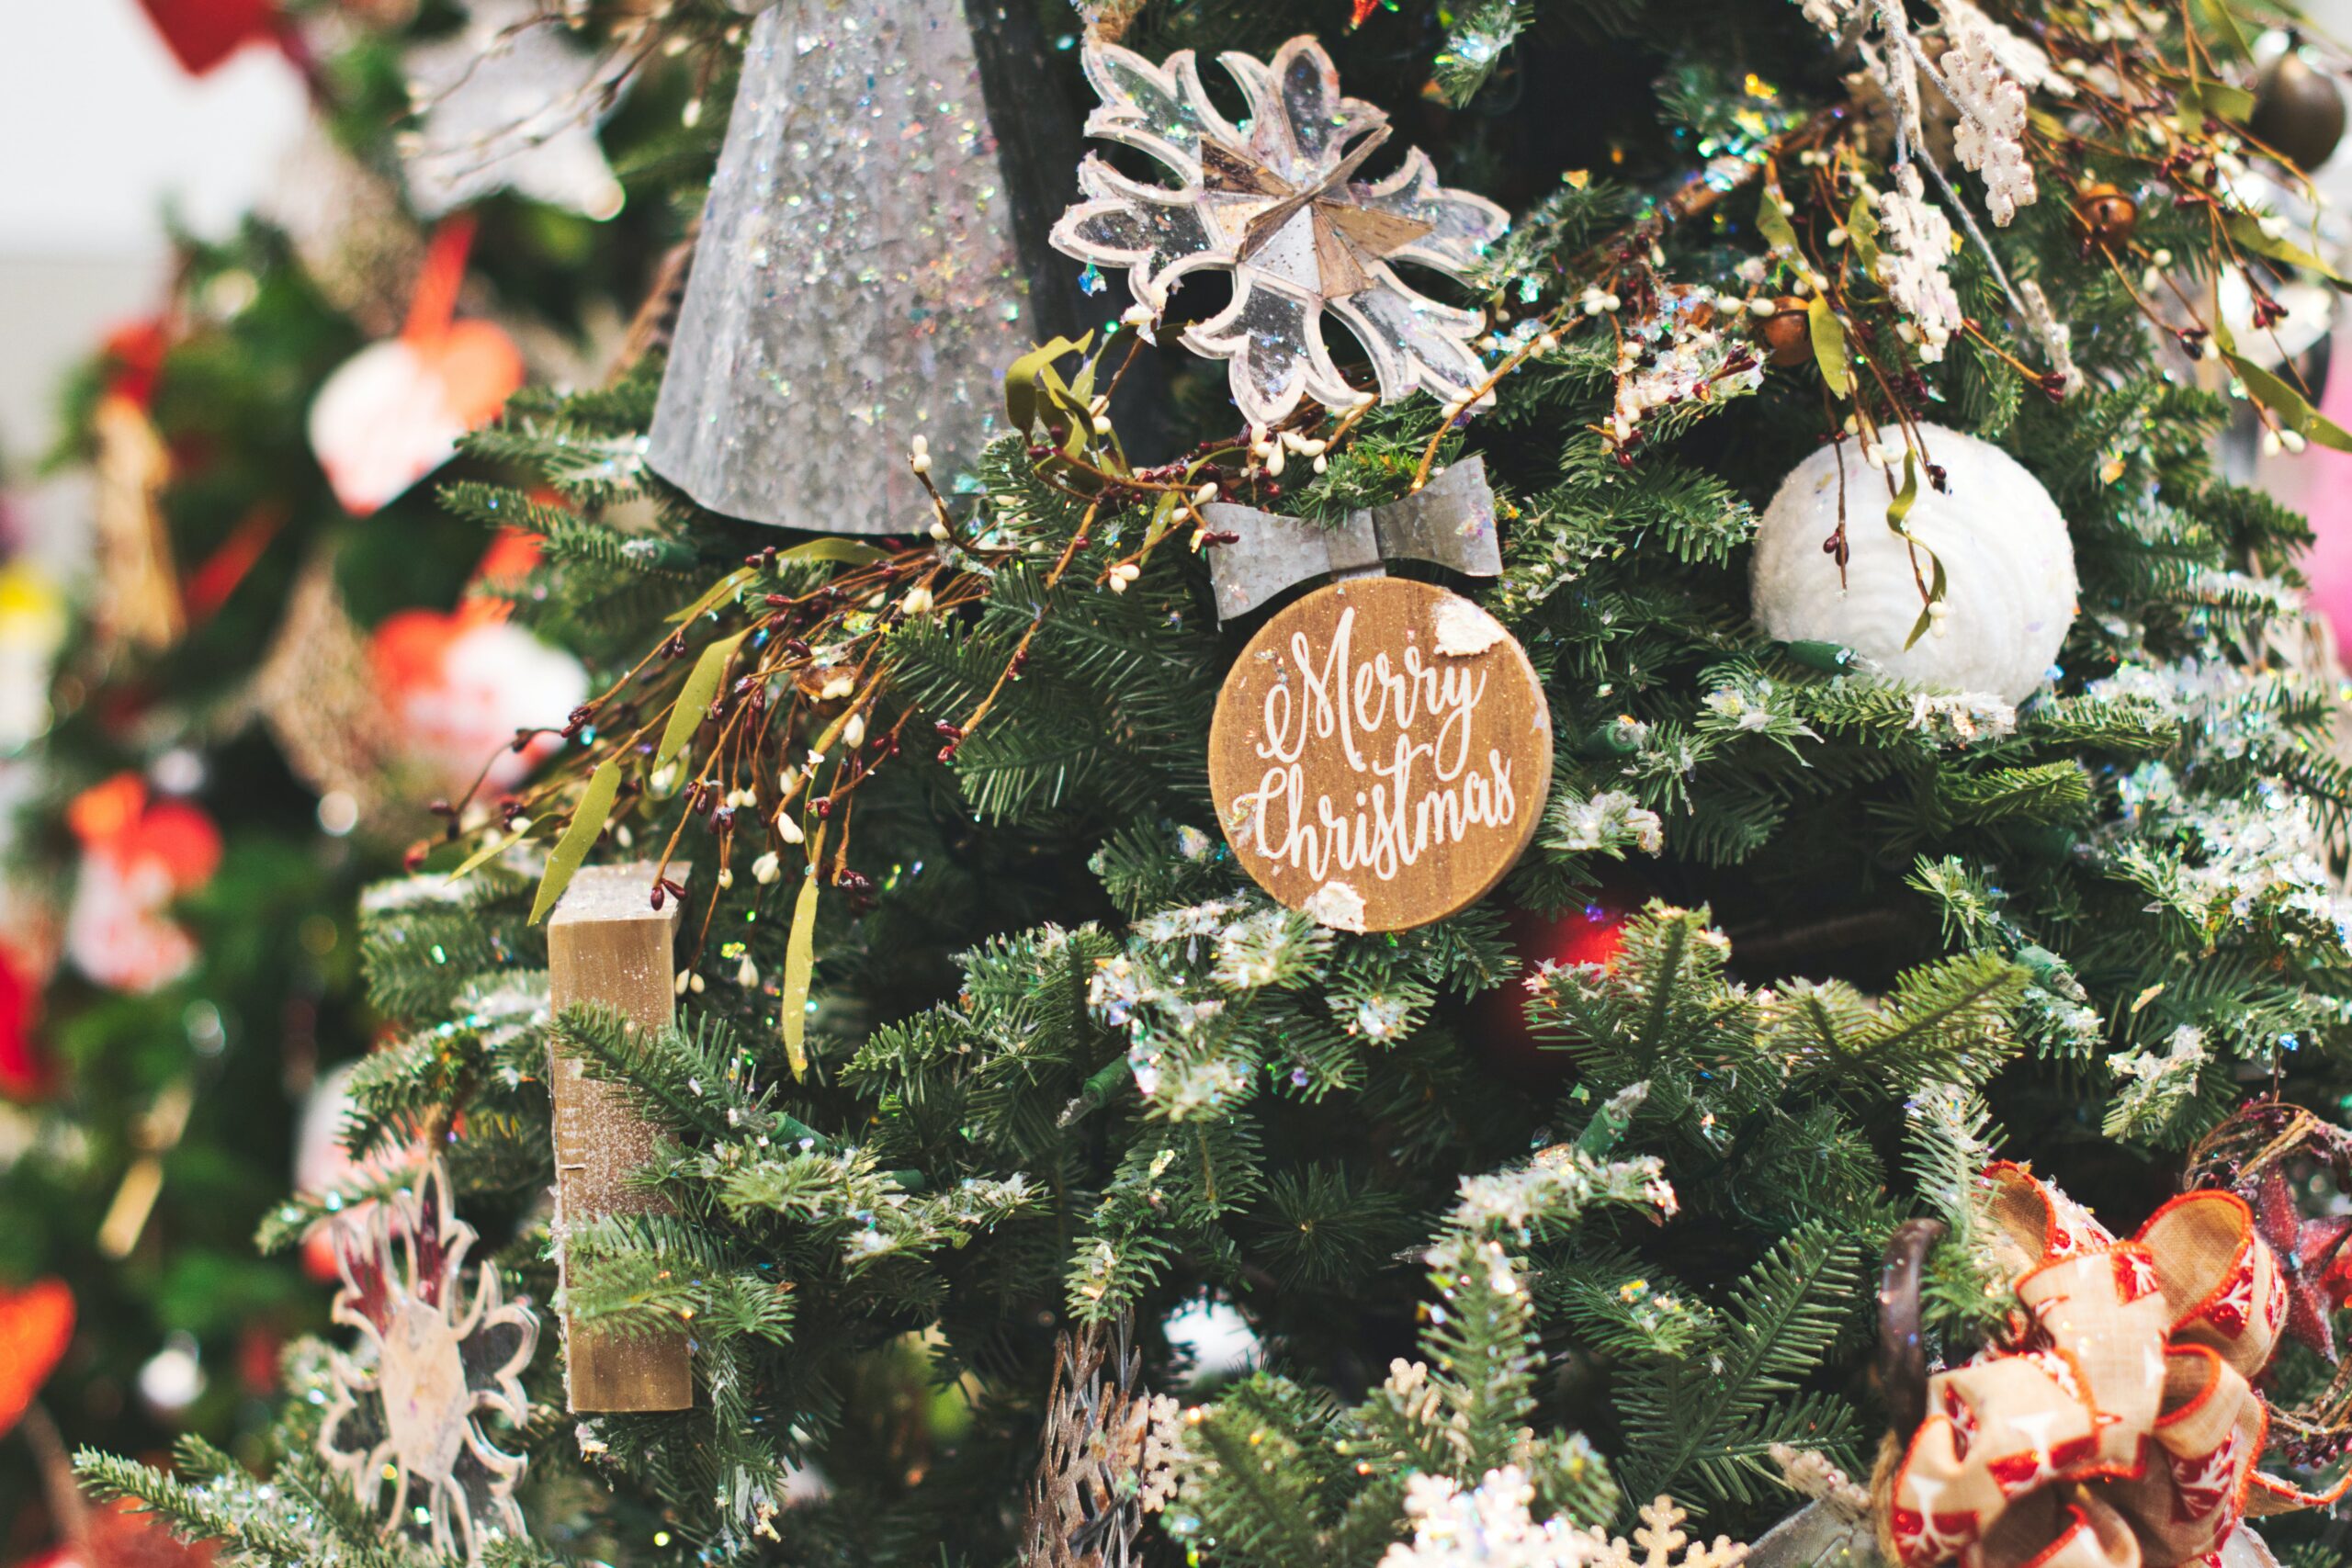 Christmas tree adorned with Christmas ornaments.